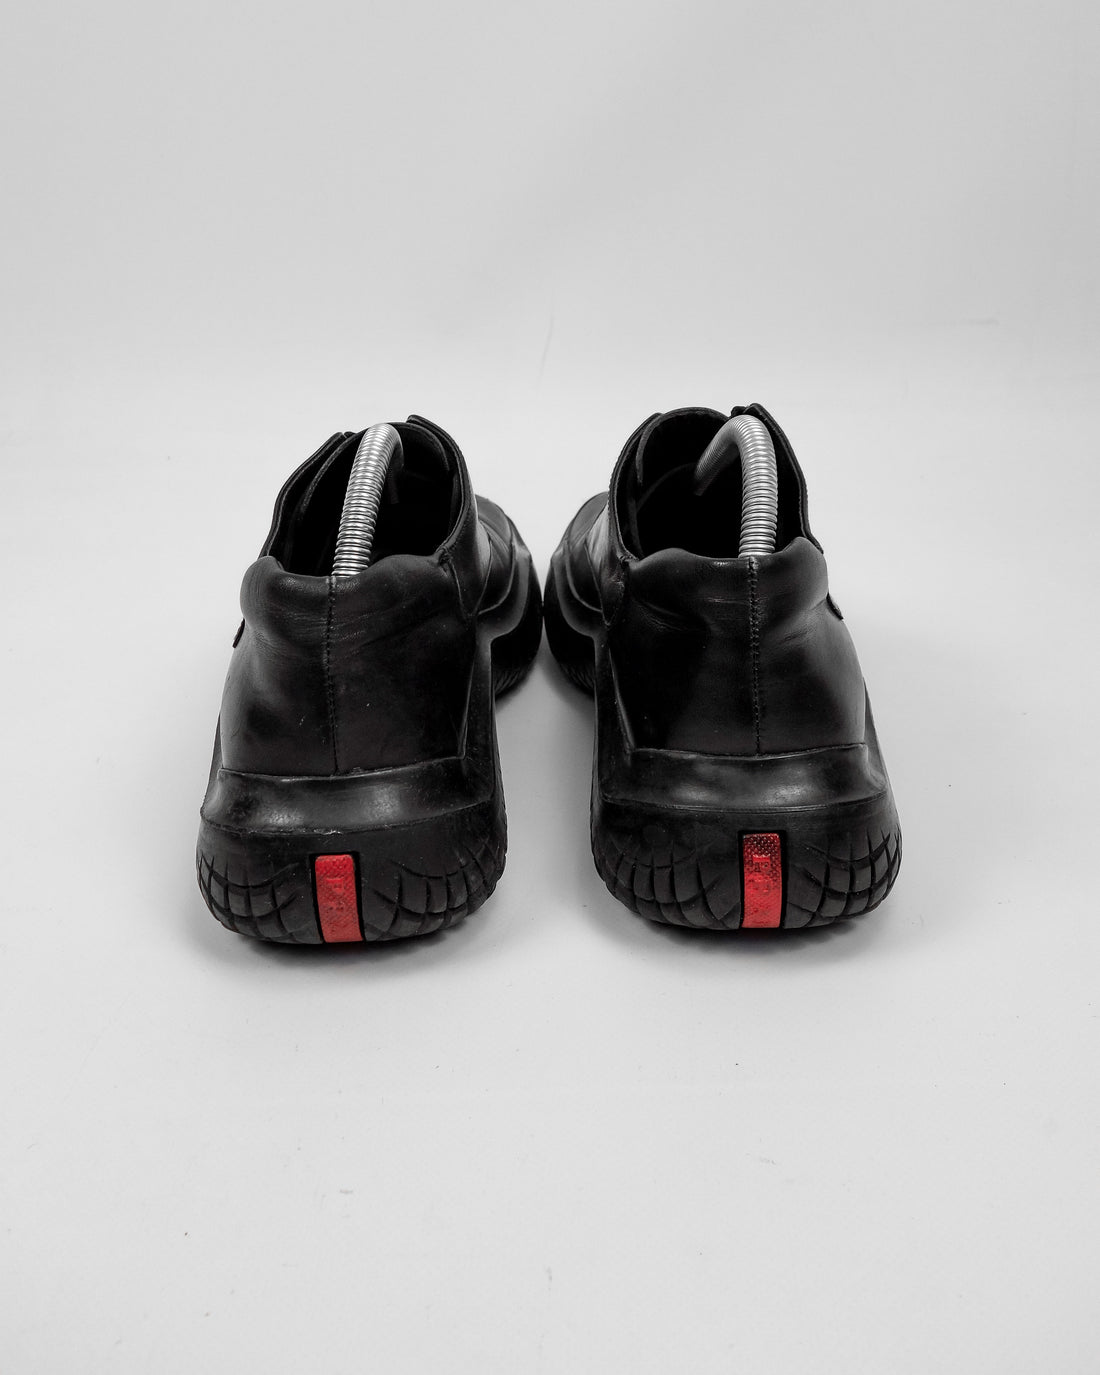 Prada x Vibram Black Leather Shoes 2000's